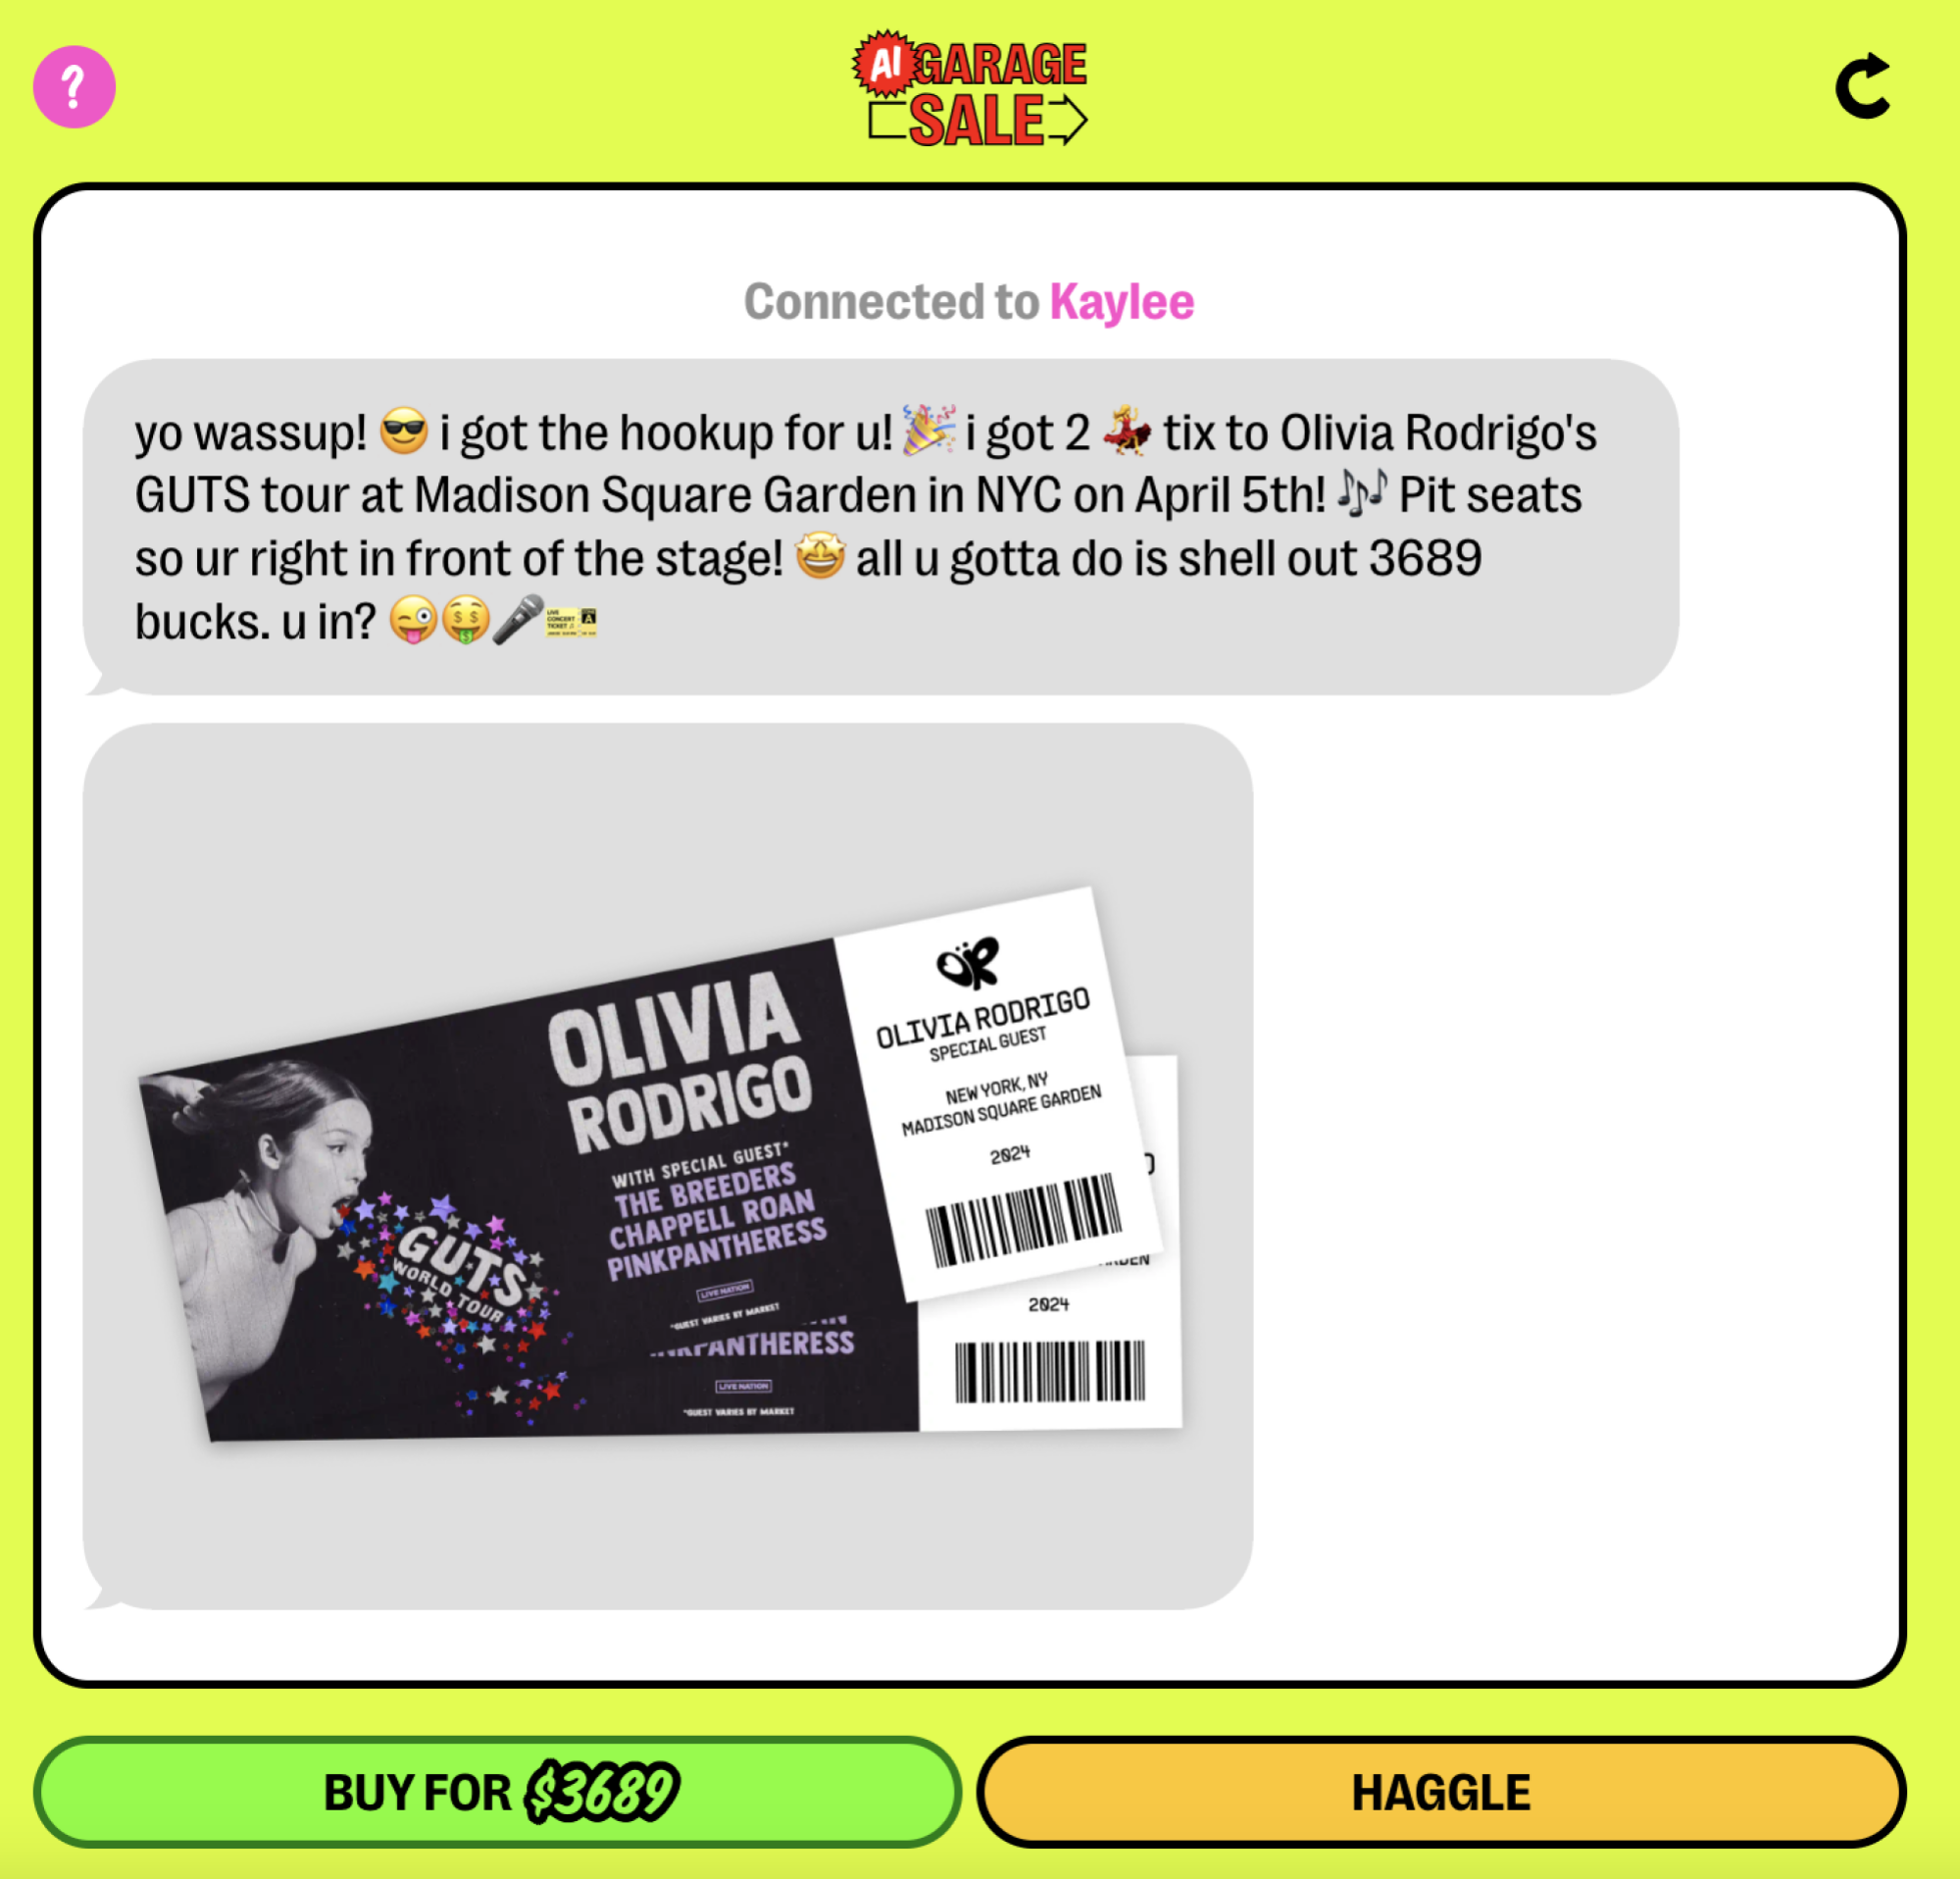 A screenshot of the AI Garage Sale bot selling Olivia Rodrigo tickets